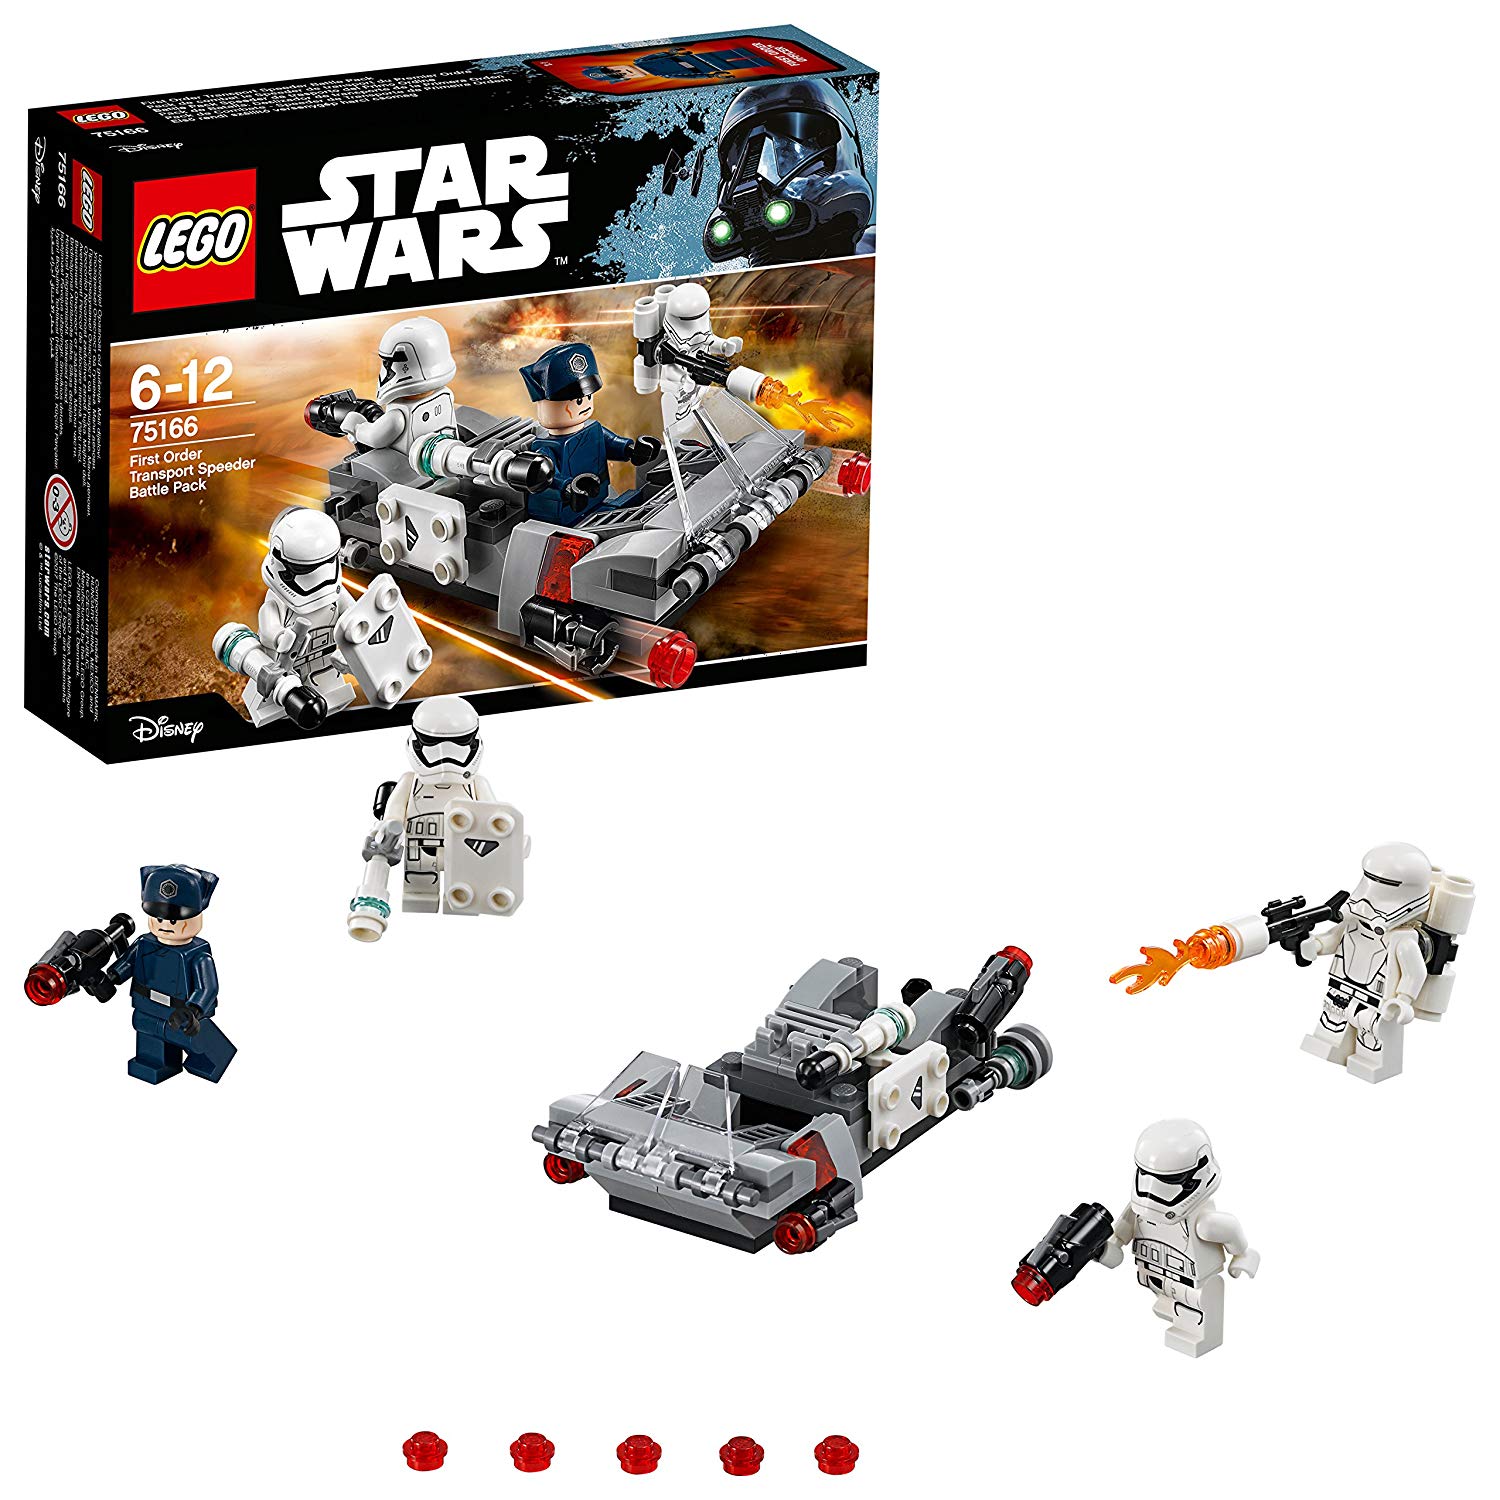 Lego Star Wars Battle Pack